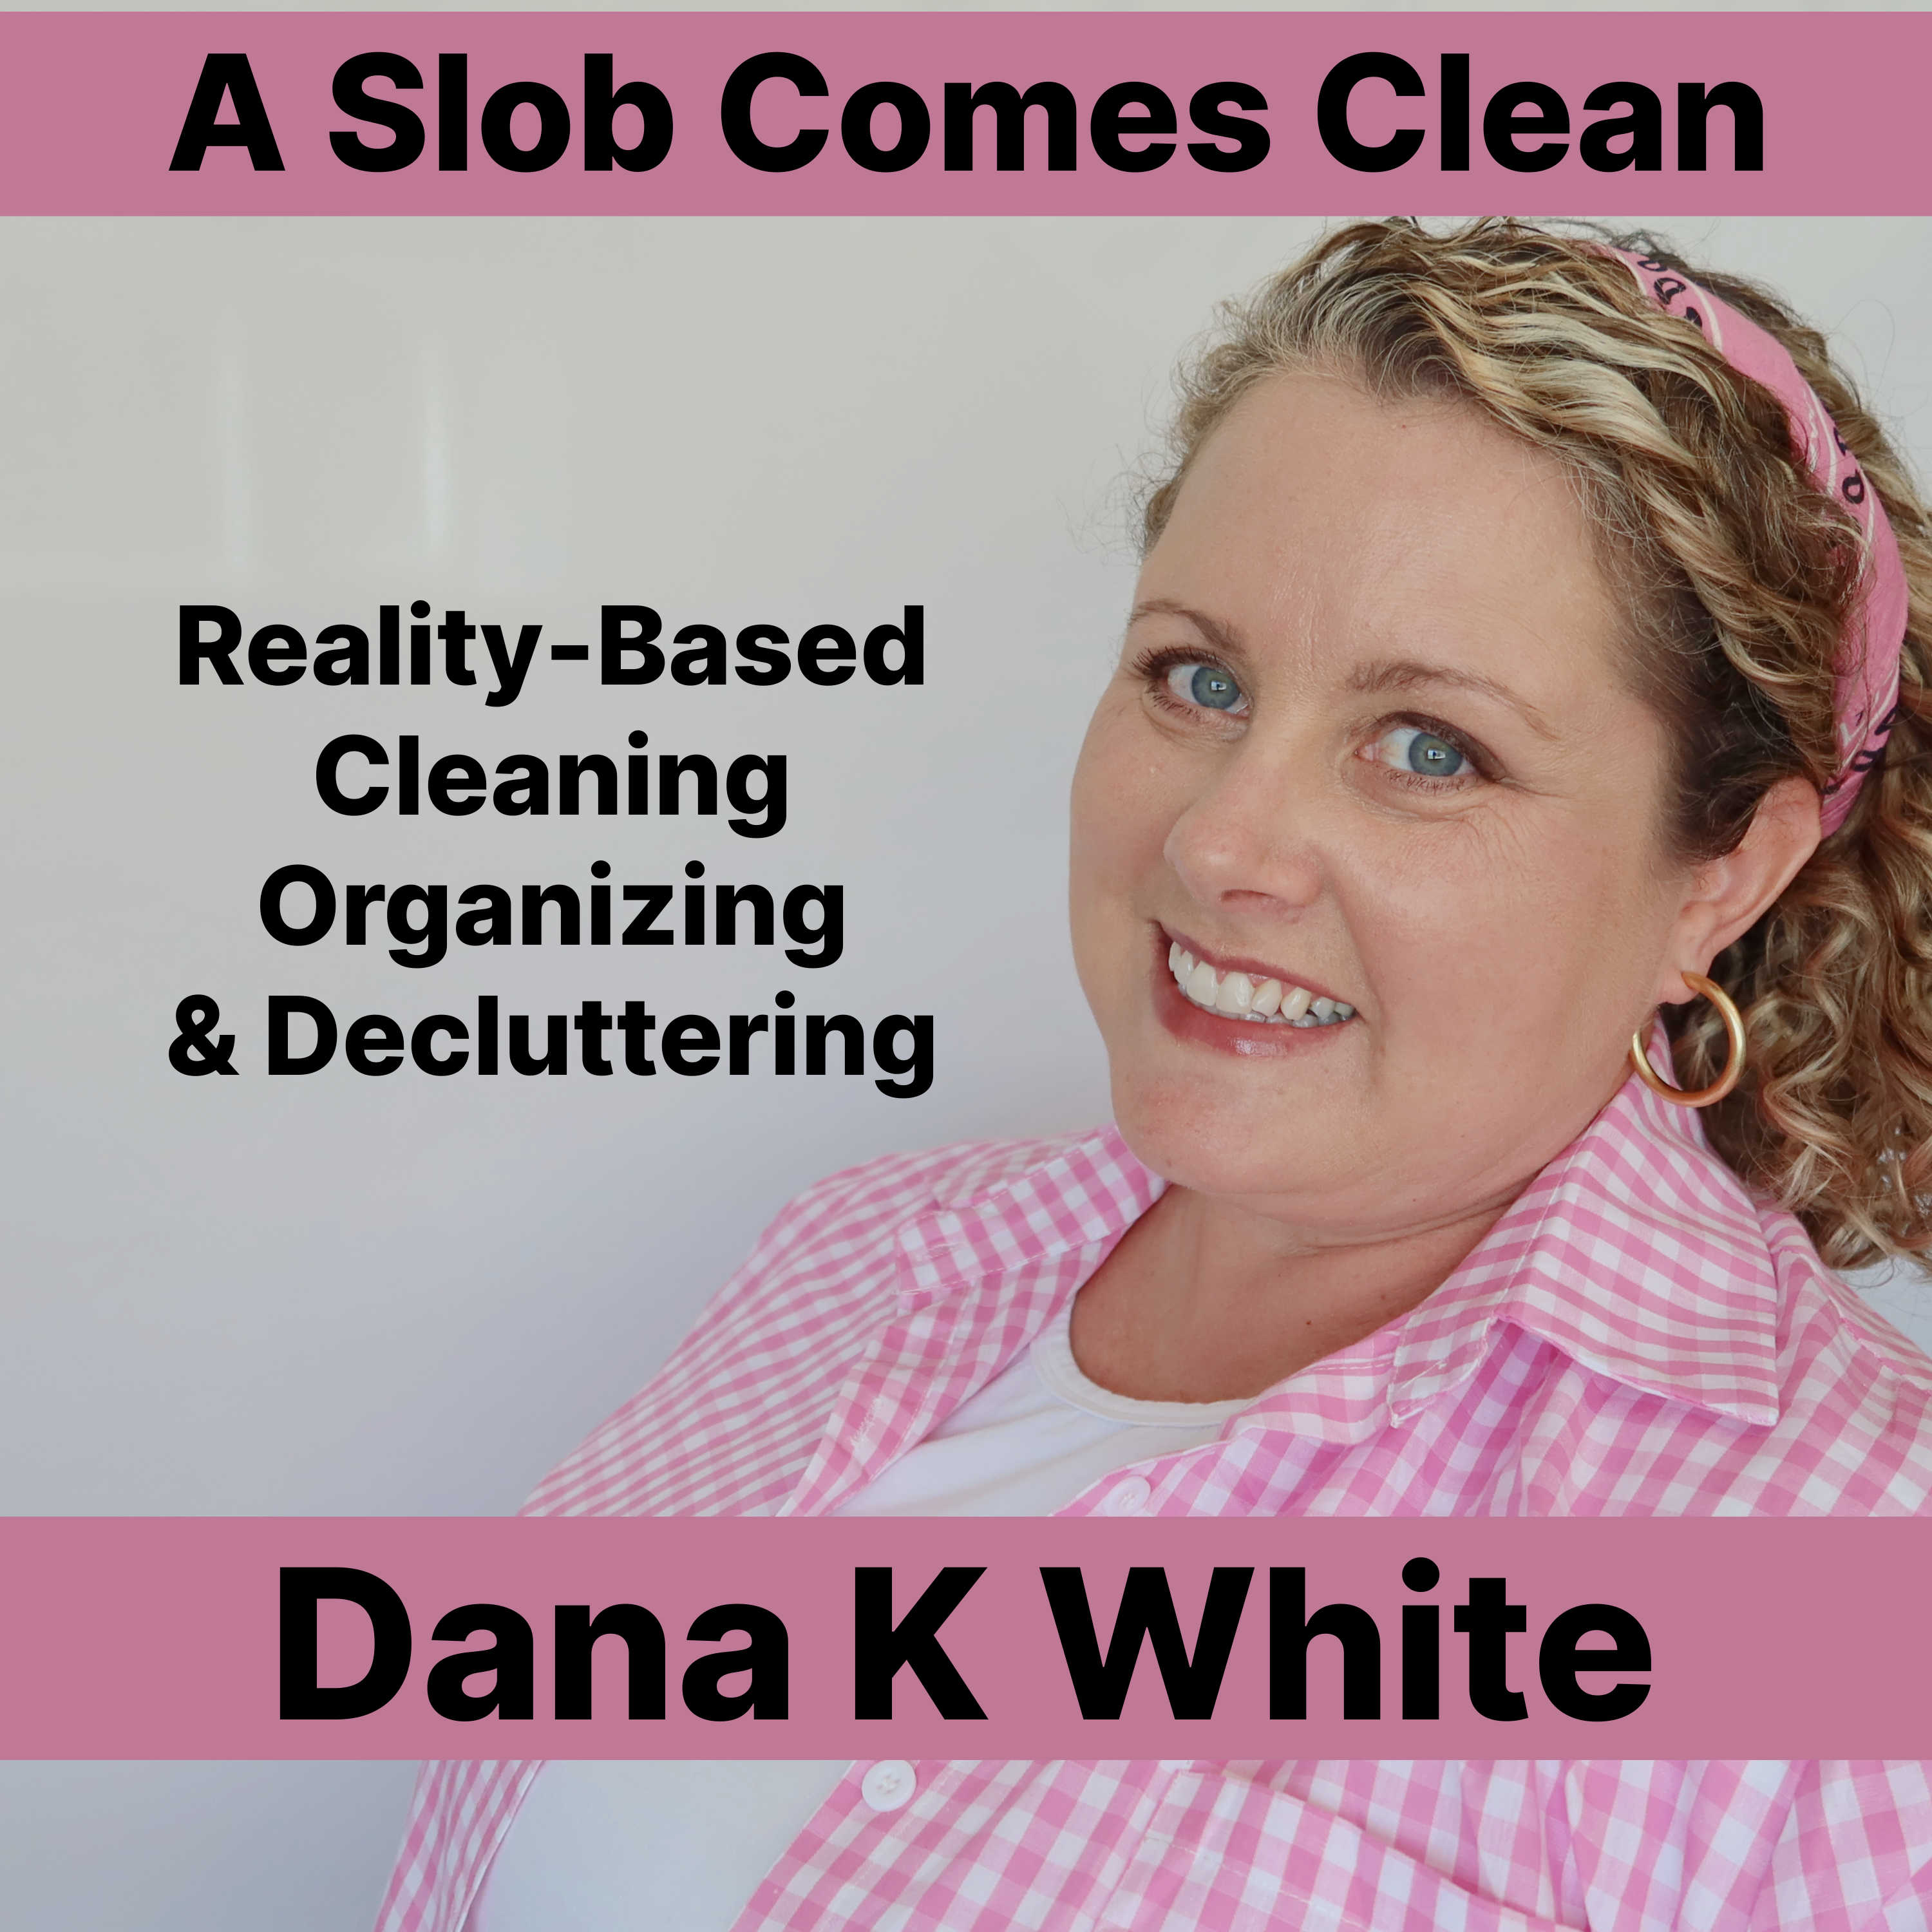 A Slob Comes Clean:Dana K. White: A Slob Comes Clean